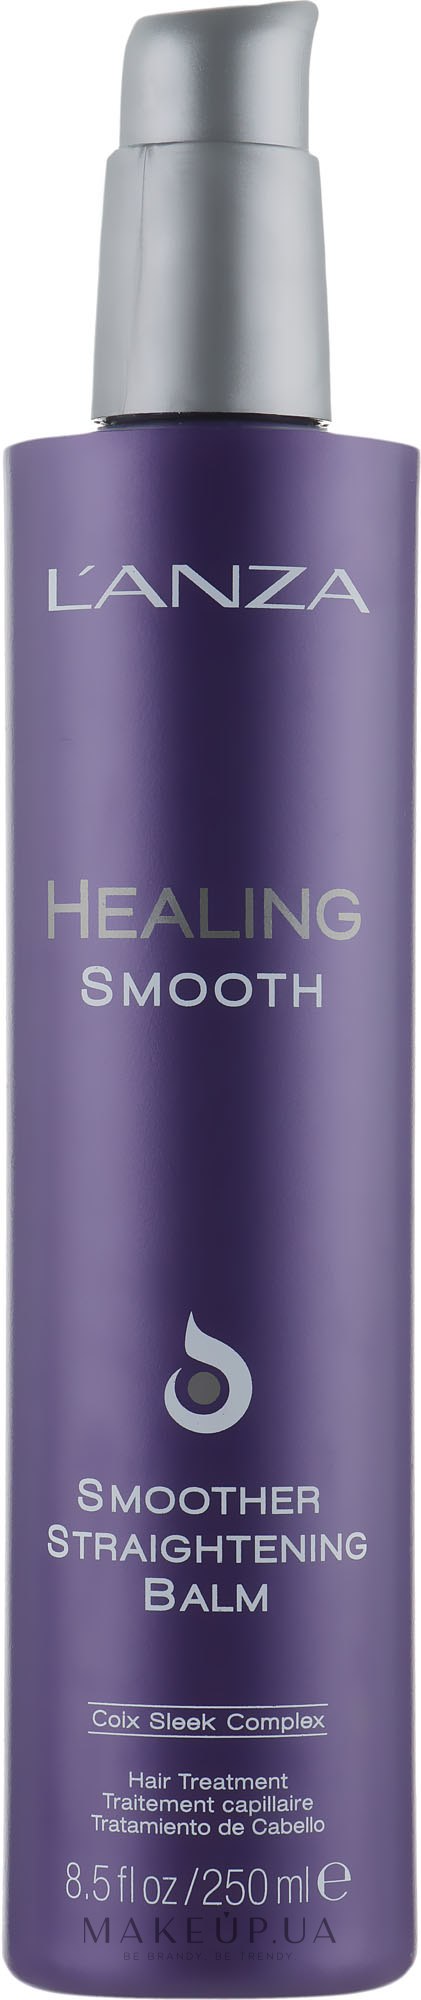 Разглаживающий термозащитный бальзам для волос - L'anza Healing Smooth Smoother Straightening Balm — фото 250ml